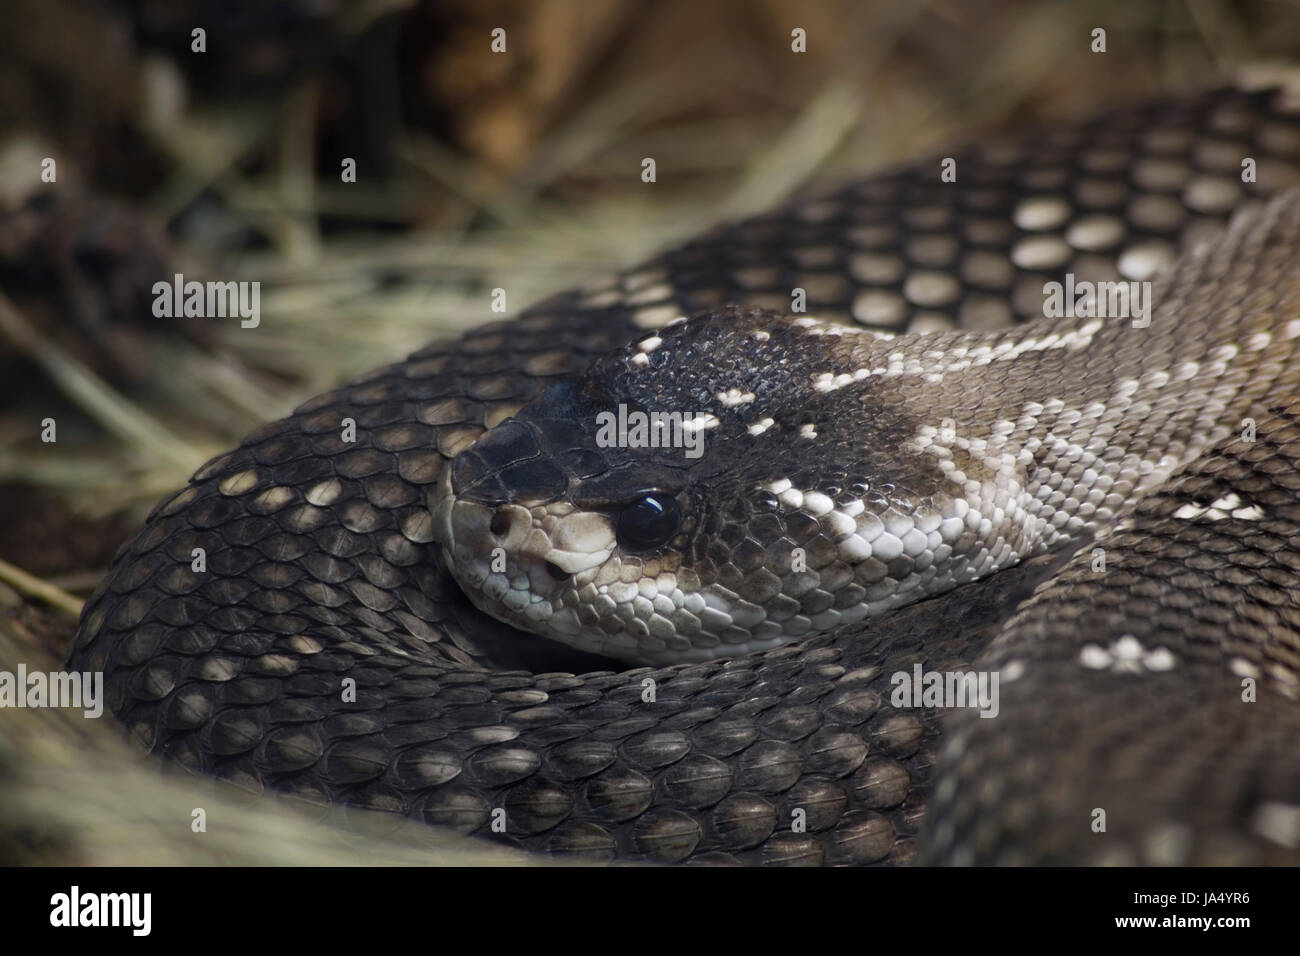 reptile, camouflage, viper, rattlesnake, lurking, wait, waiting, animal, Stock Photo